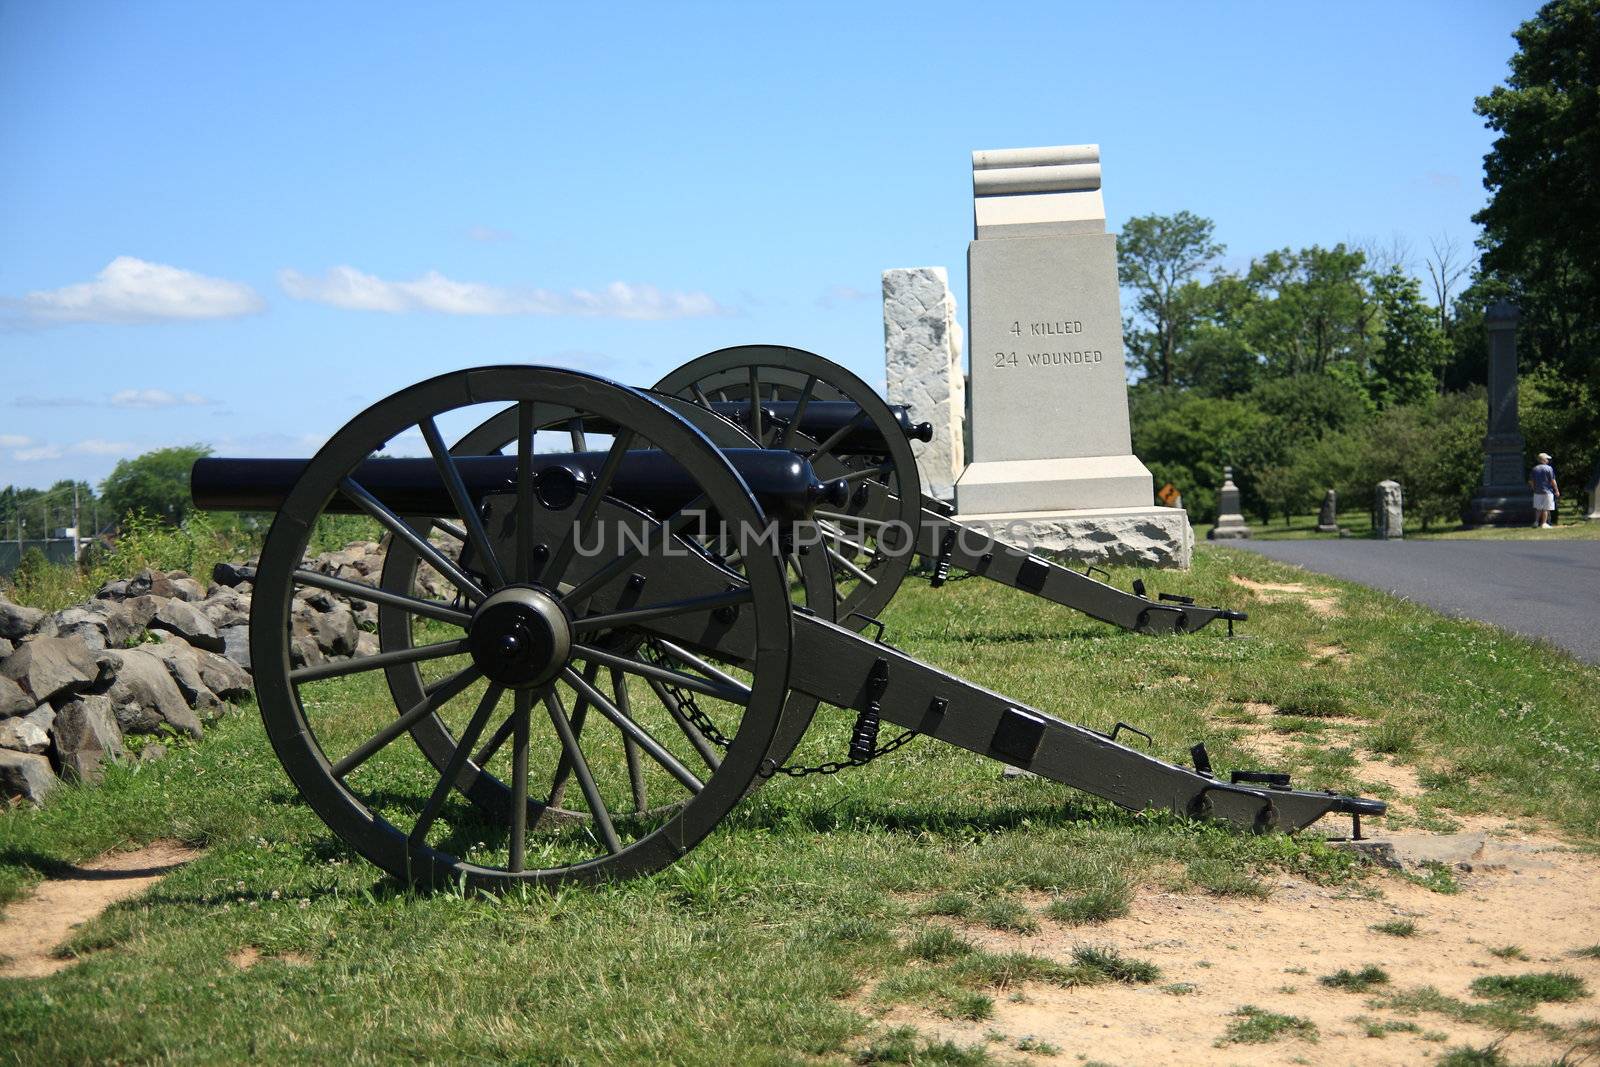 Gettysburg Battlefield by Ffooter